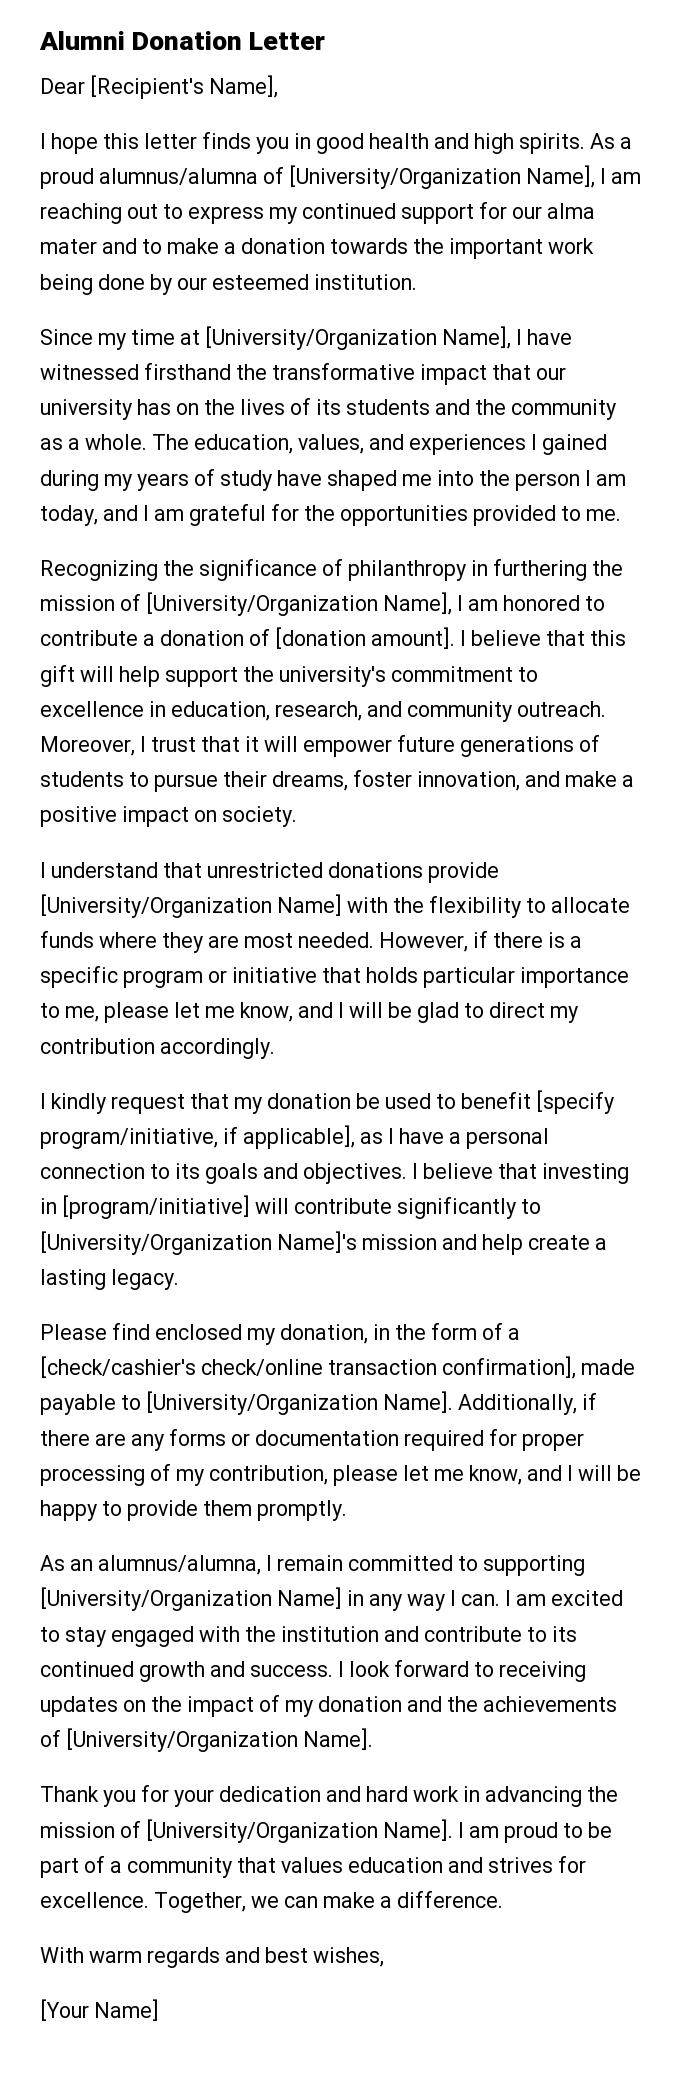 Alumni Donation Letter